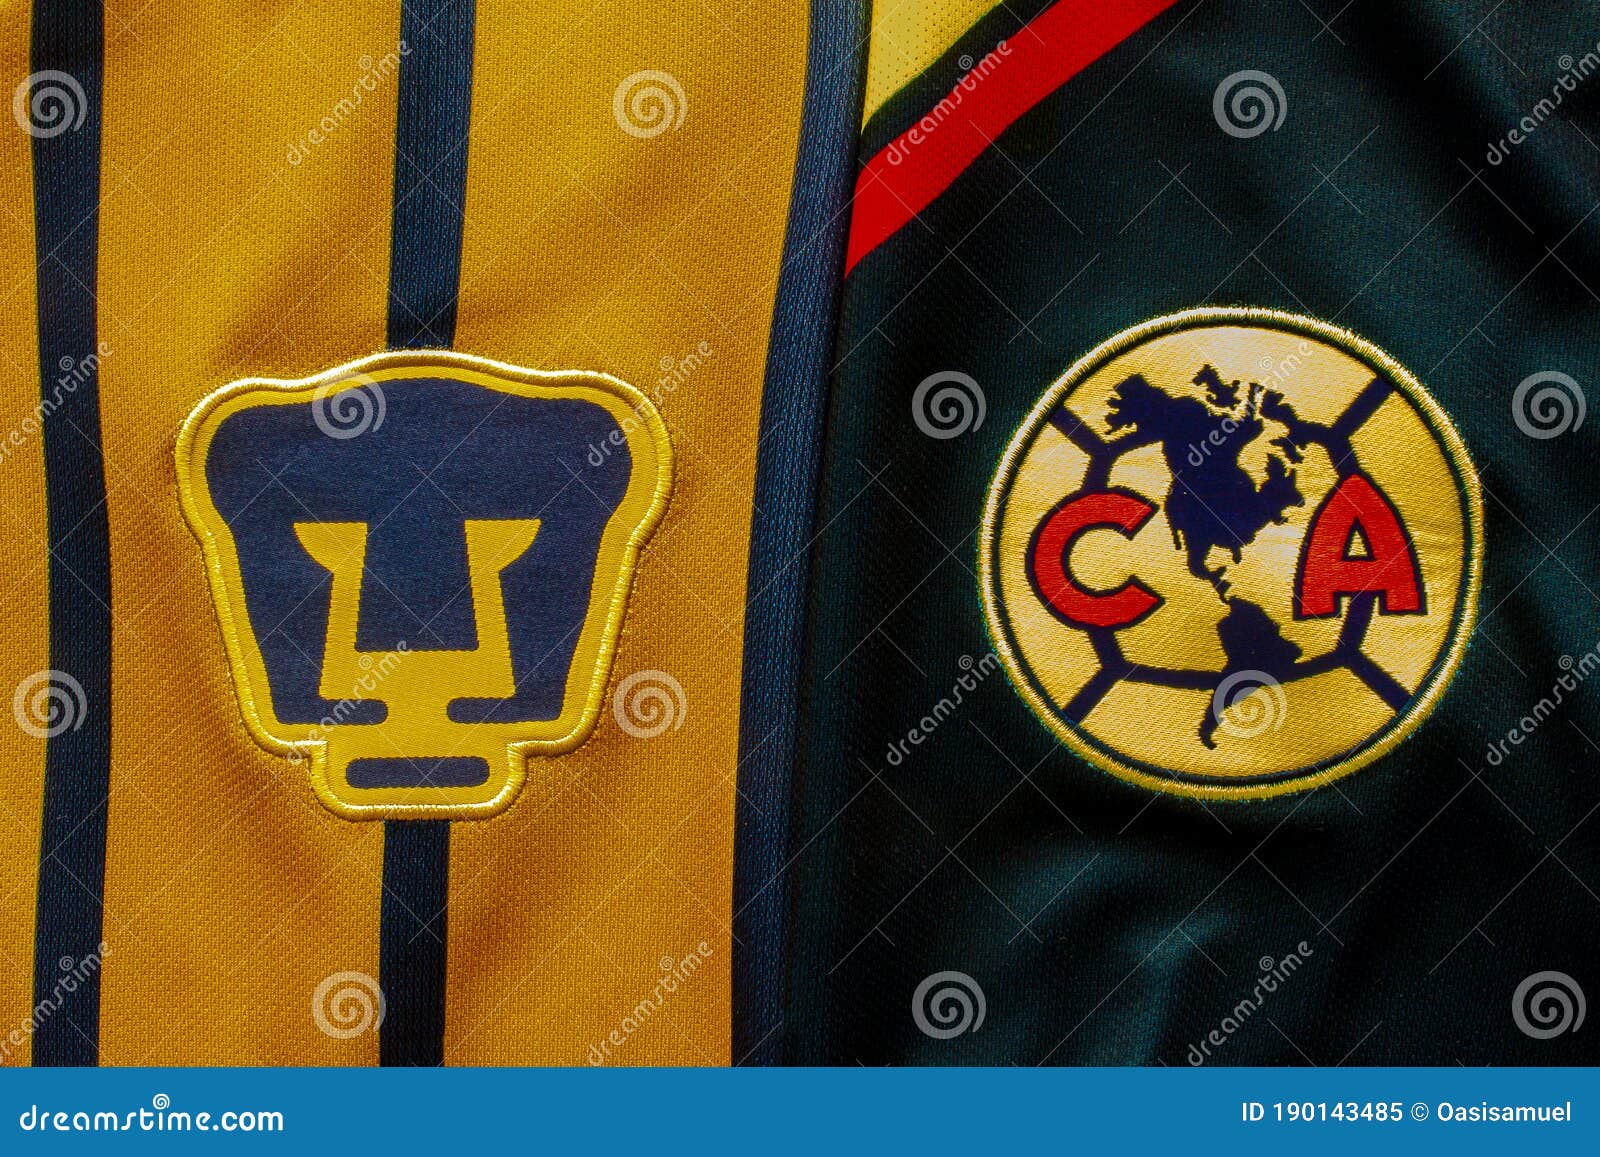 Pumas UNAM Vs Club America Football Soccer Close Up To Their Logo on a  Jersey Editorial Image - Image of uniform, sport: 190143485